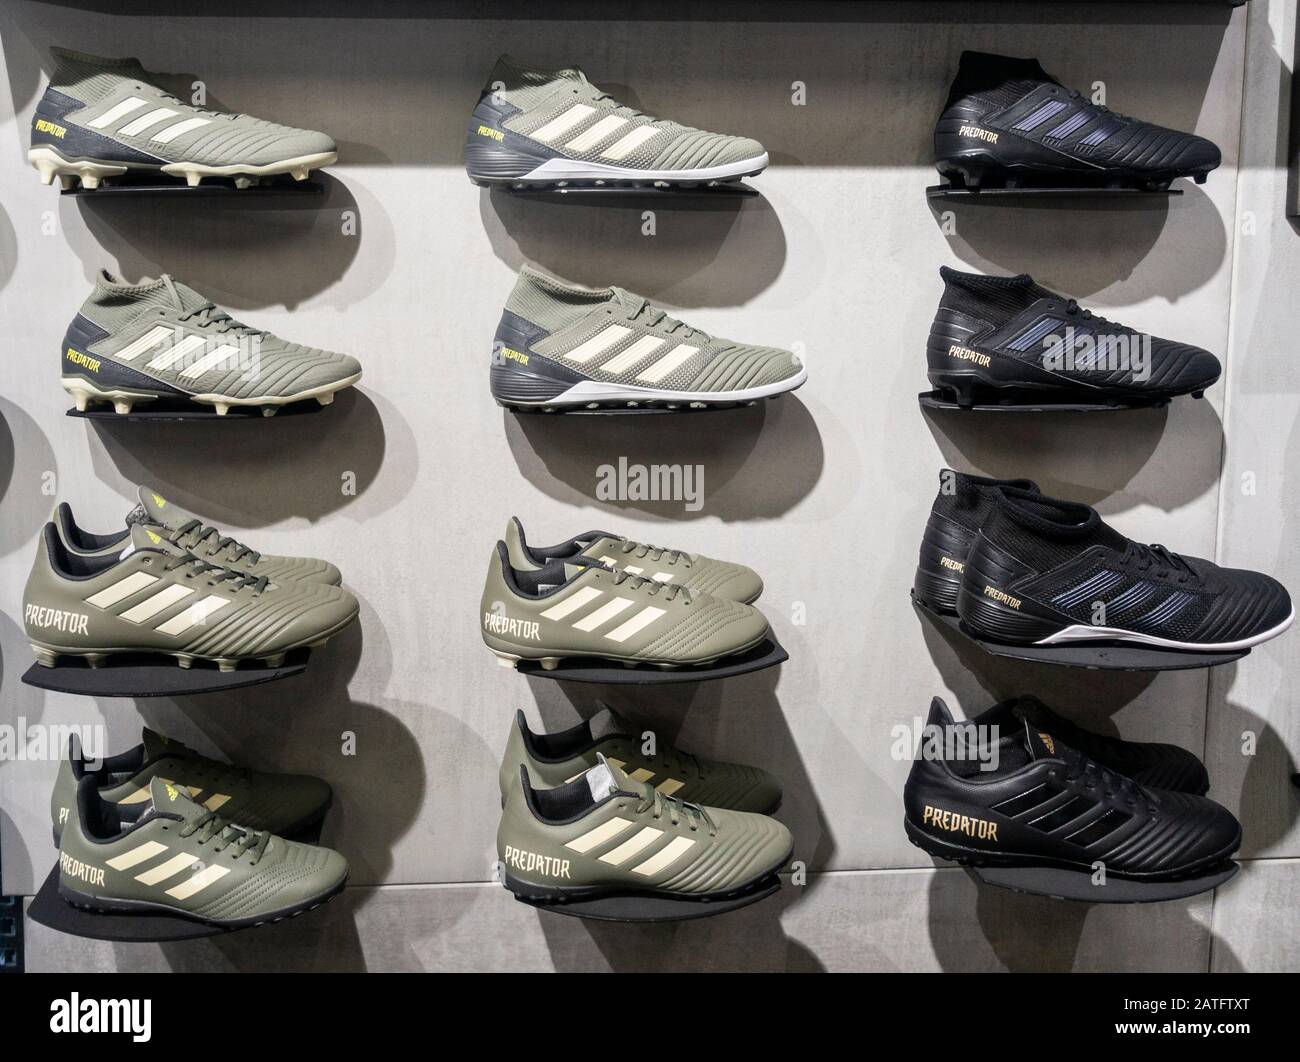 Adidas predator hi-res stock photography and images - Alamy